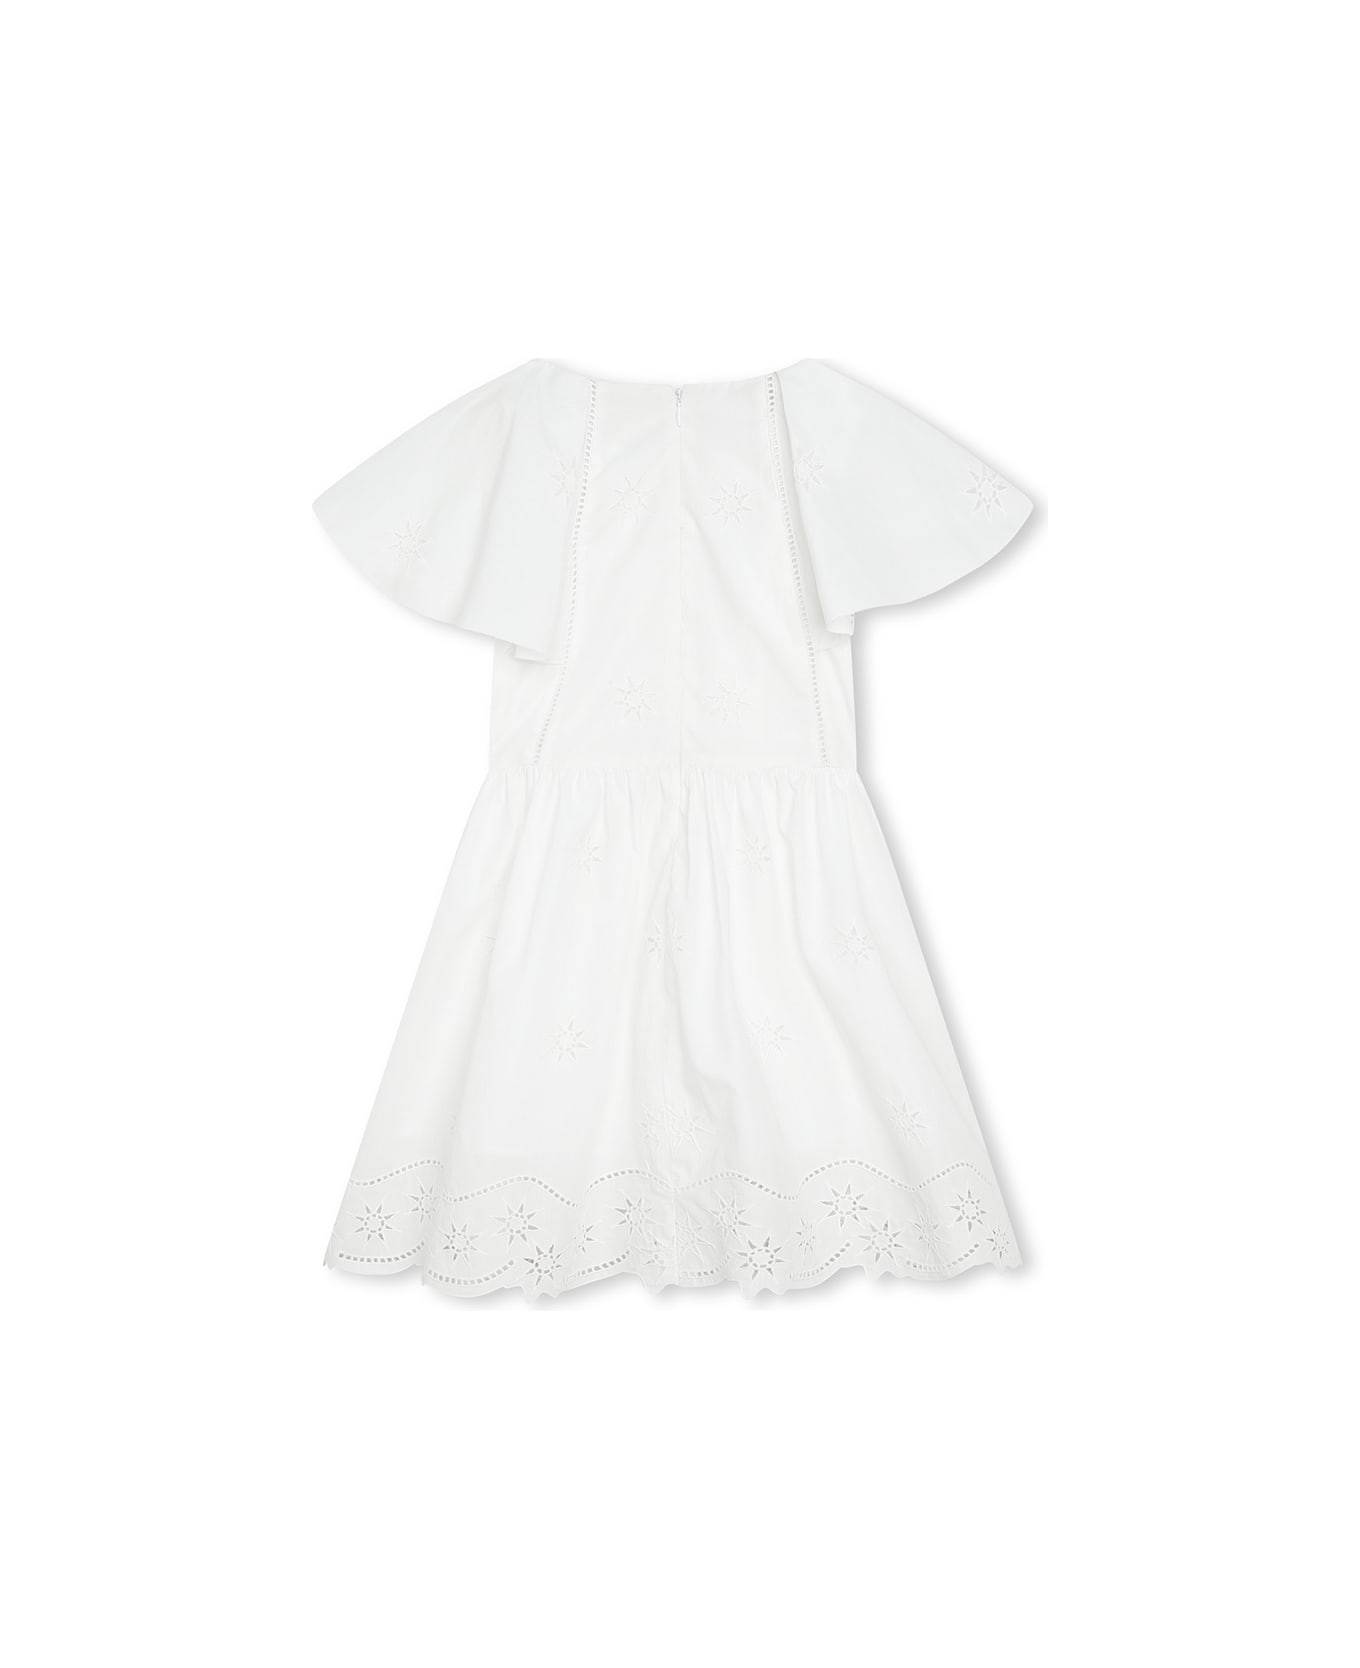 Chloé White Cotton Dress With Stars - White